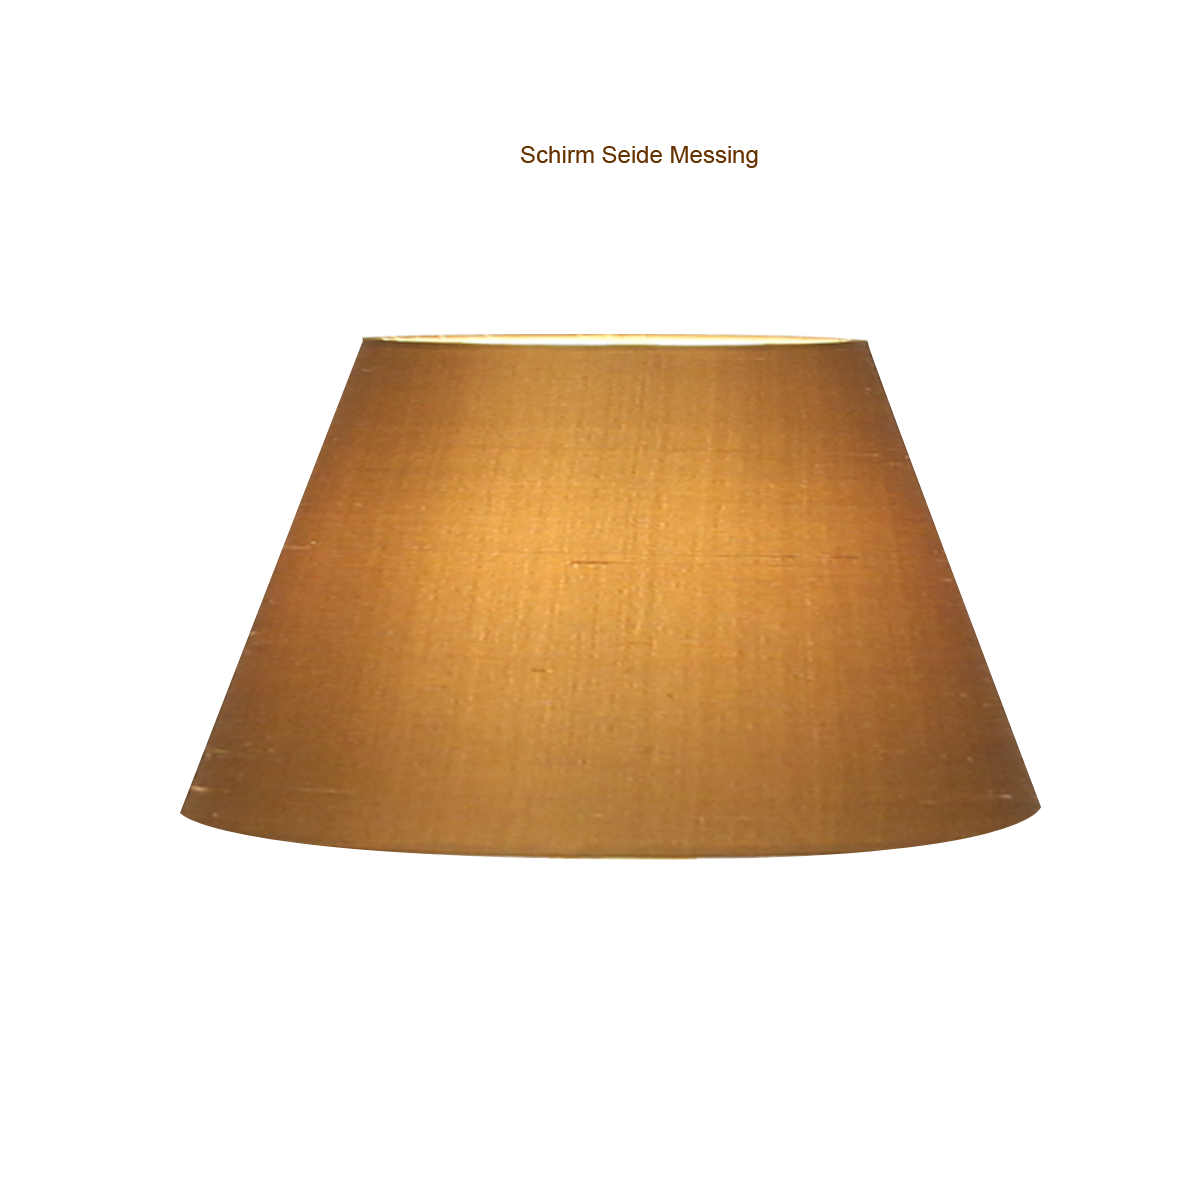 Lampenschirm konisch D=30cm Tischleuchte Wandlampe E27 Seide Farbe nach Wahl